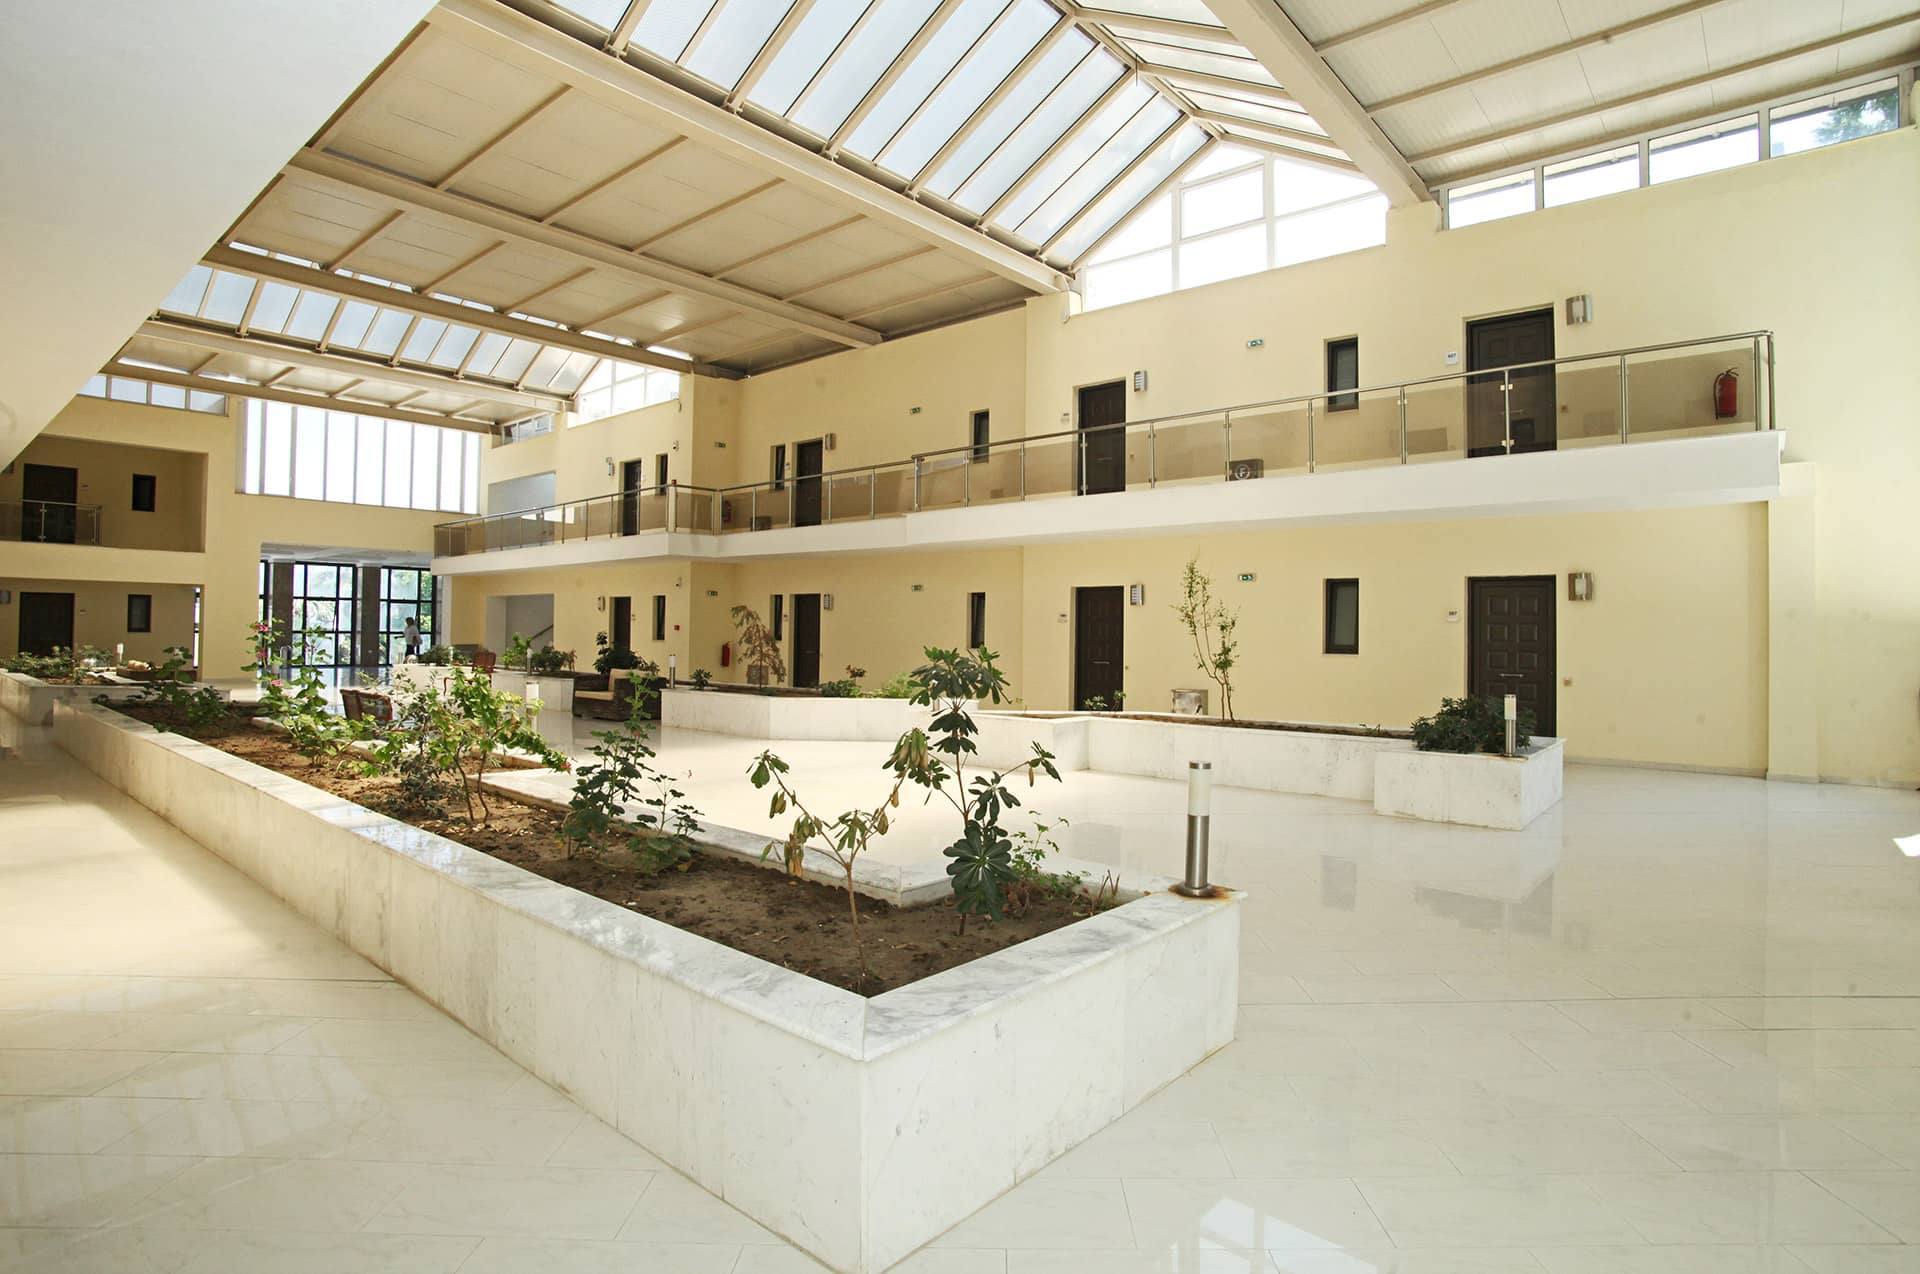 Hotel Naias interior.jpg